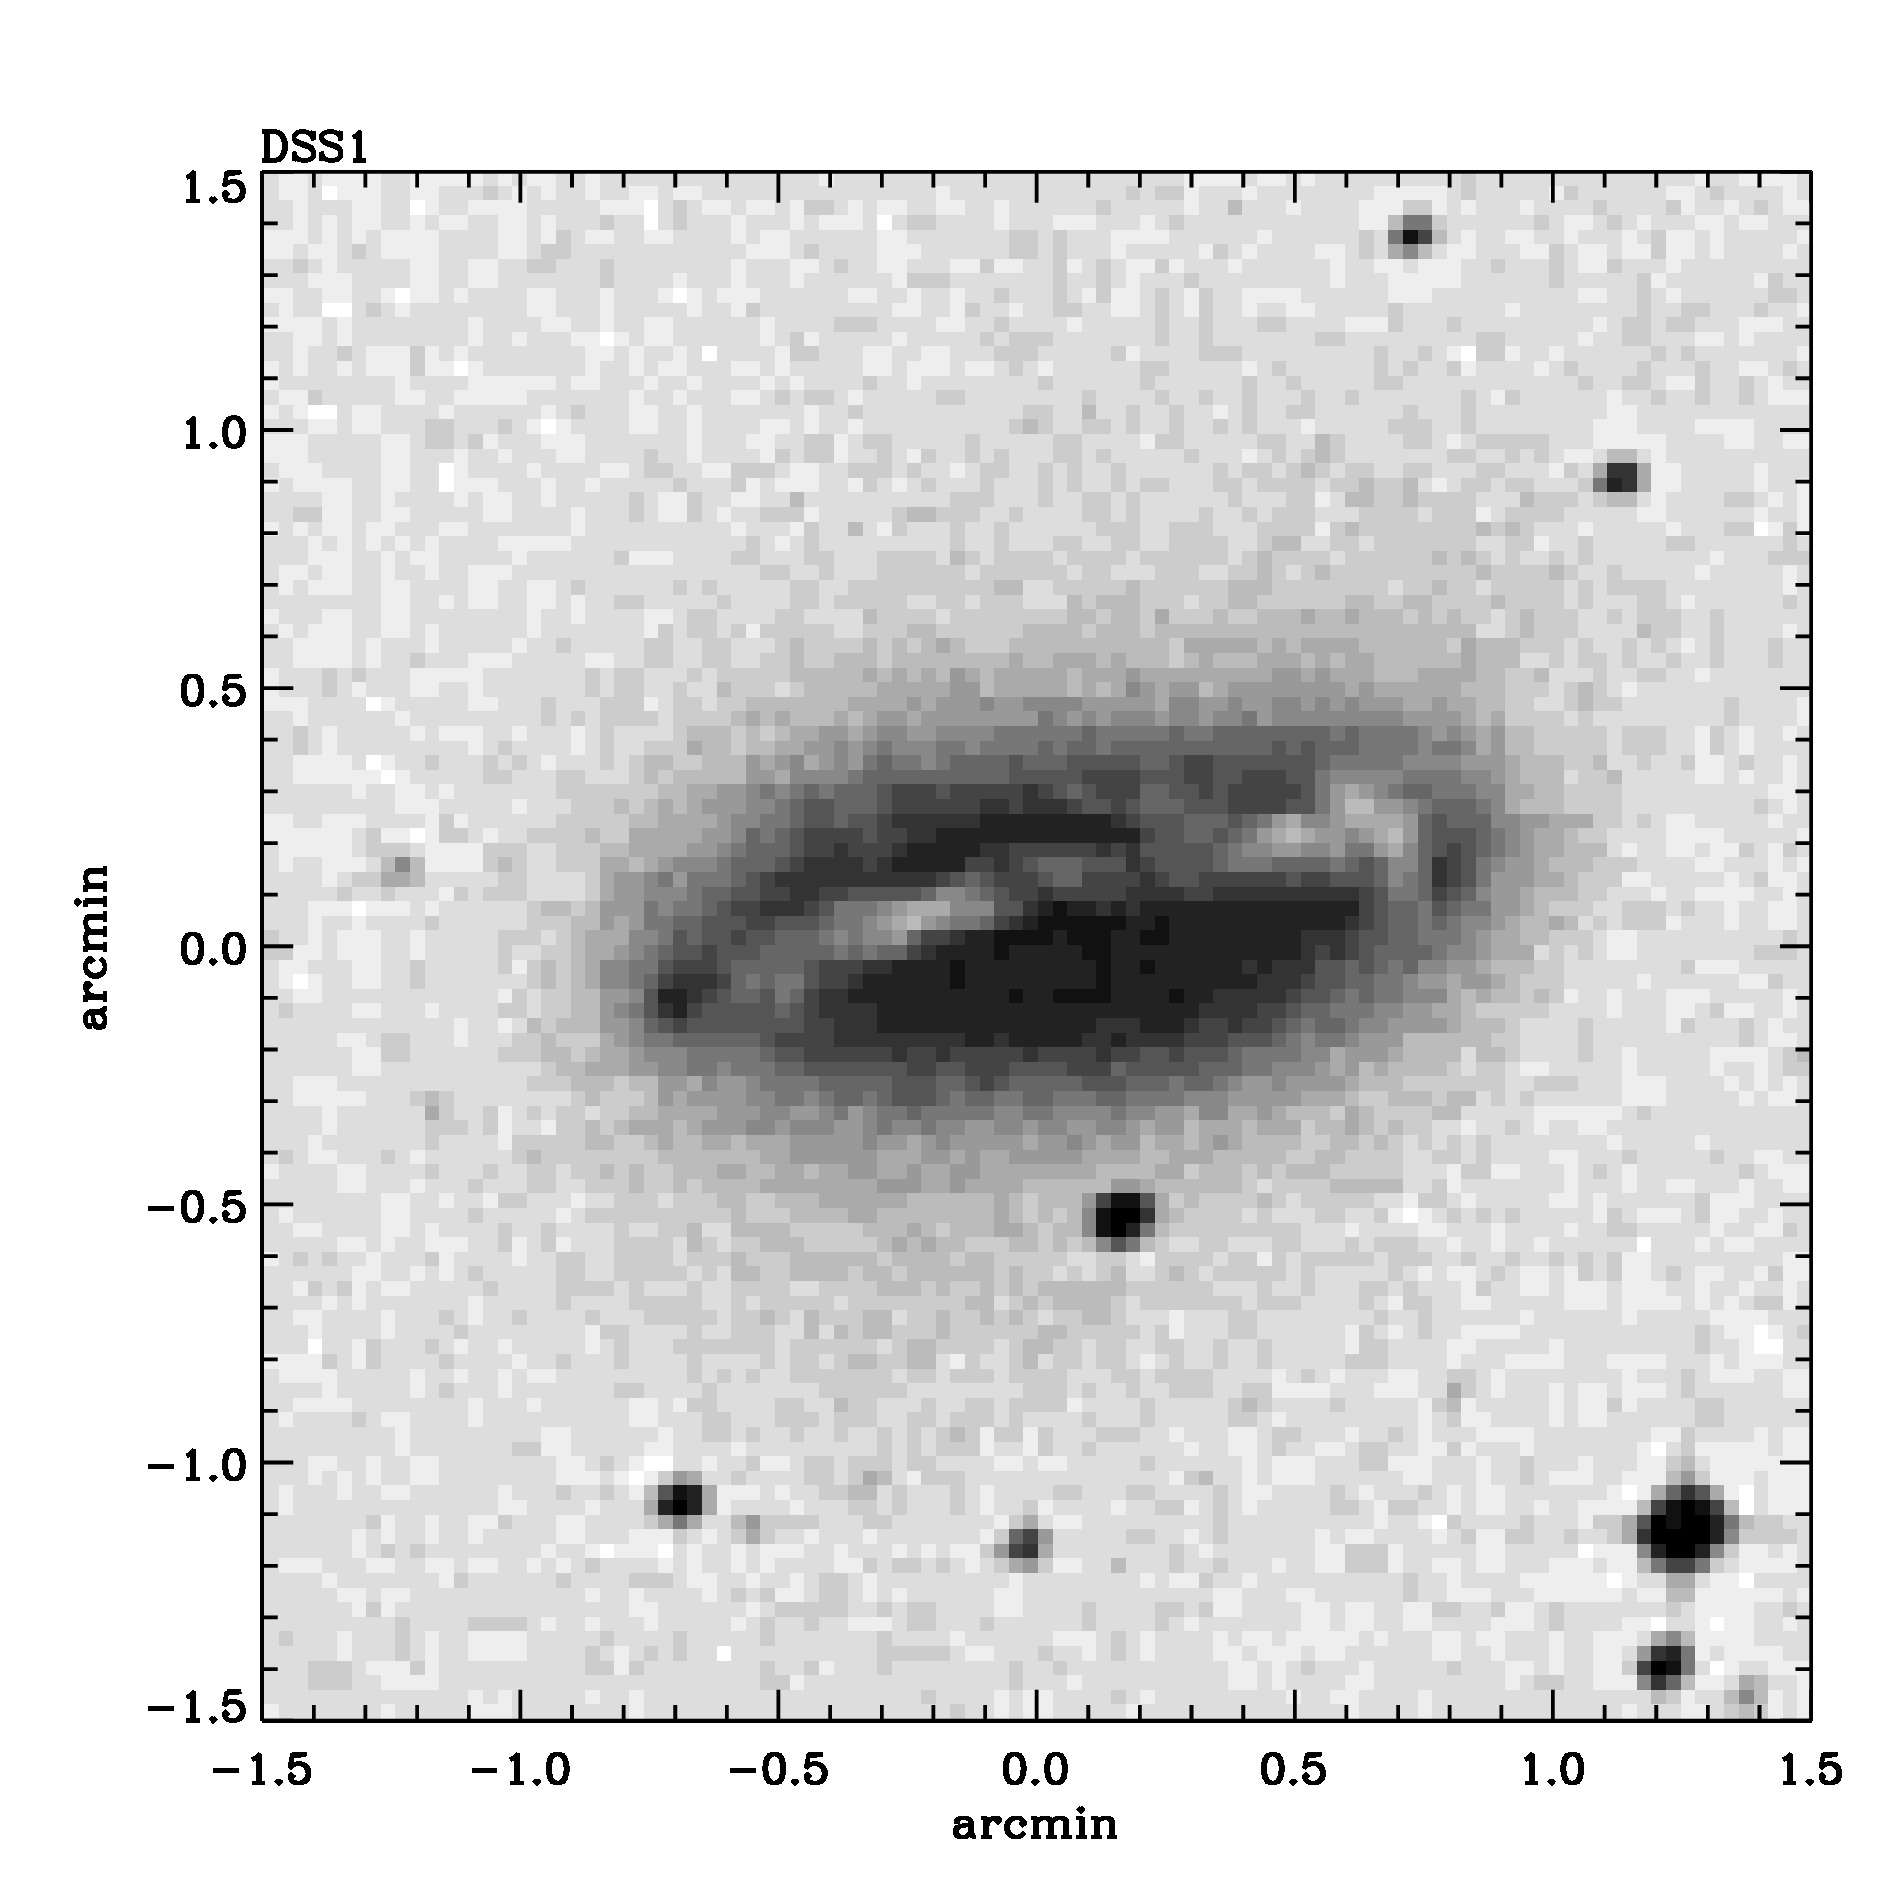 Optical image for SWIFT J2201.9-3152